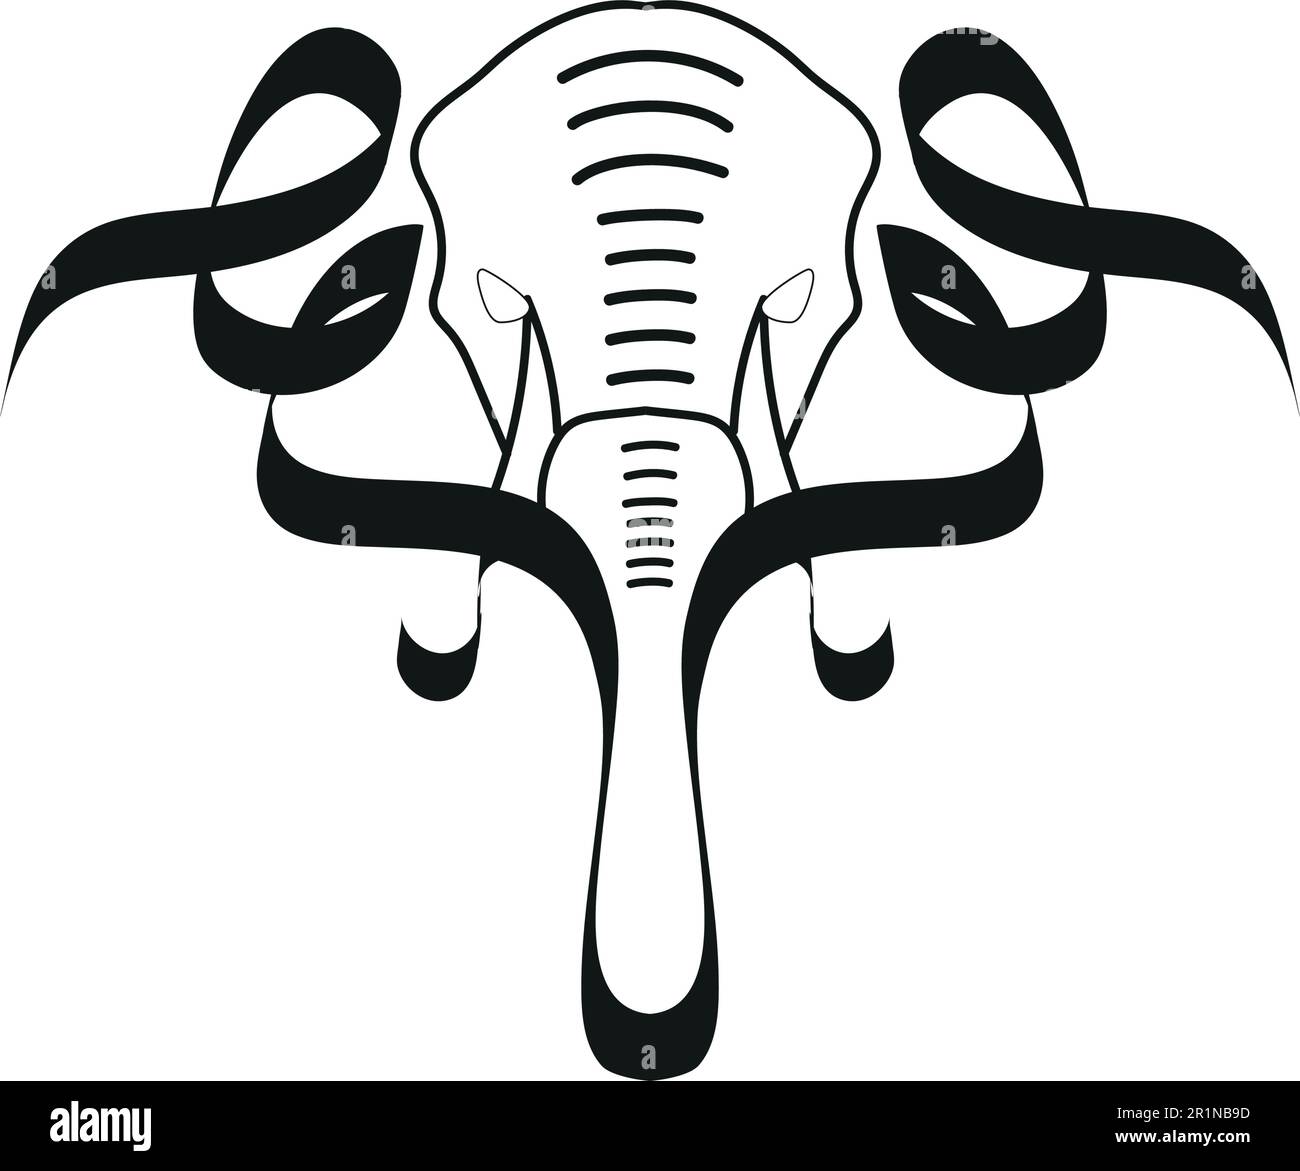 15 Best Elephant head tattoo ideas  elephant elephant tattoos elephant  drawing